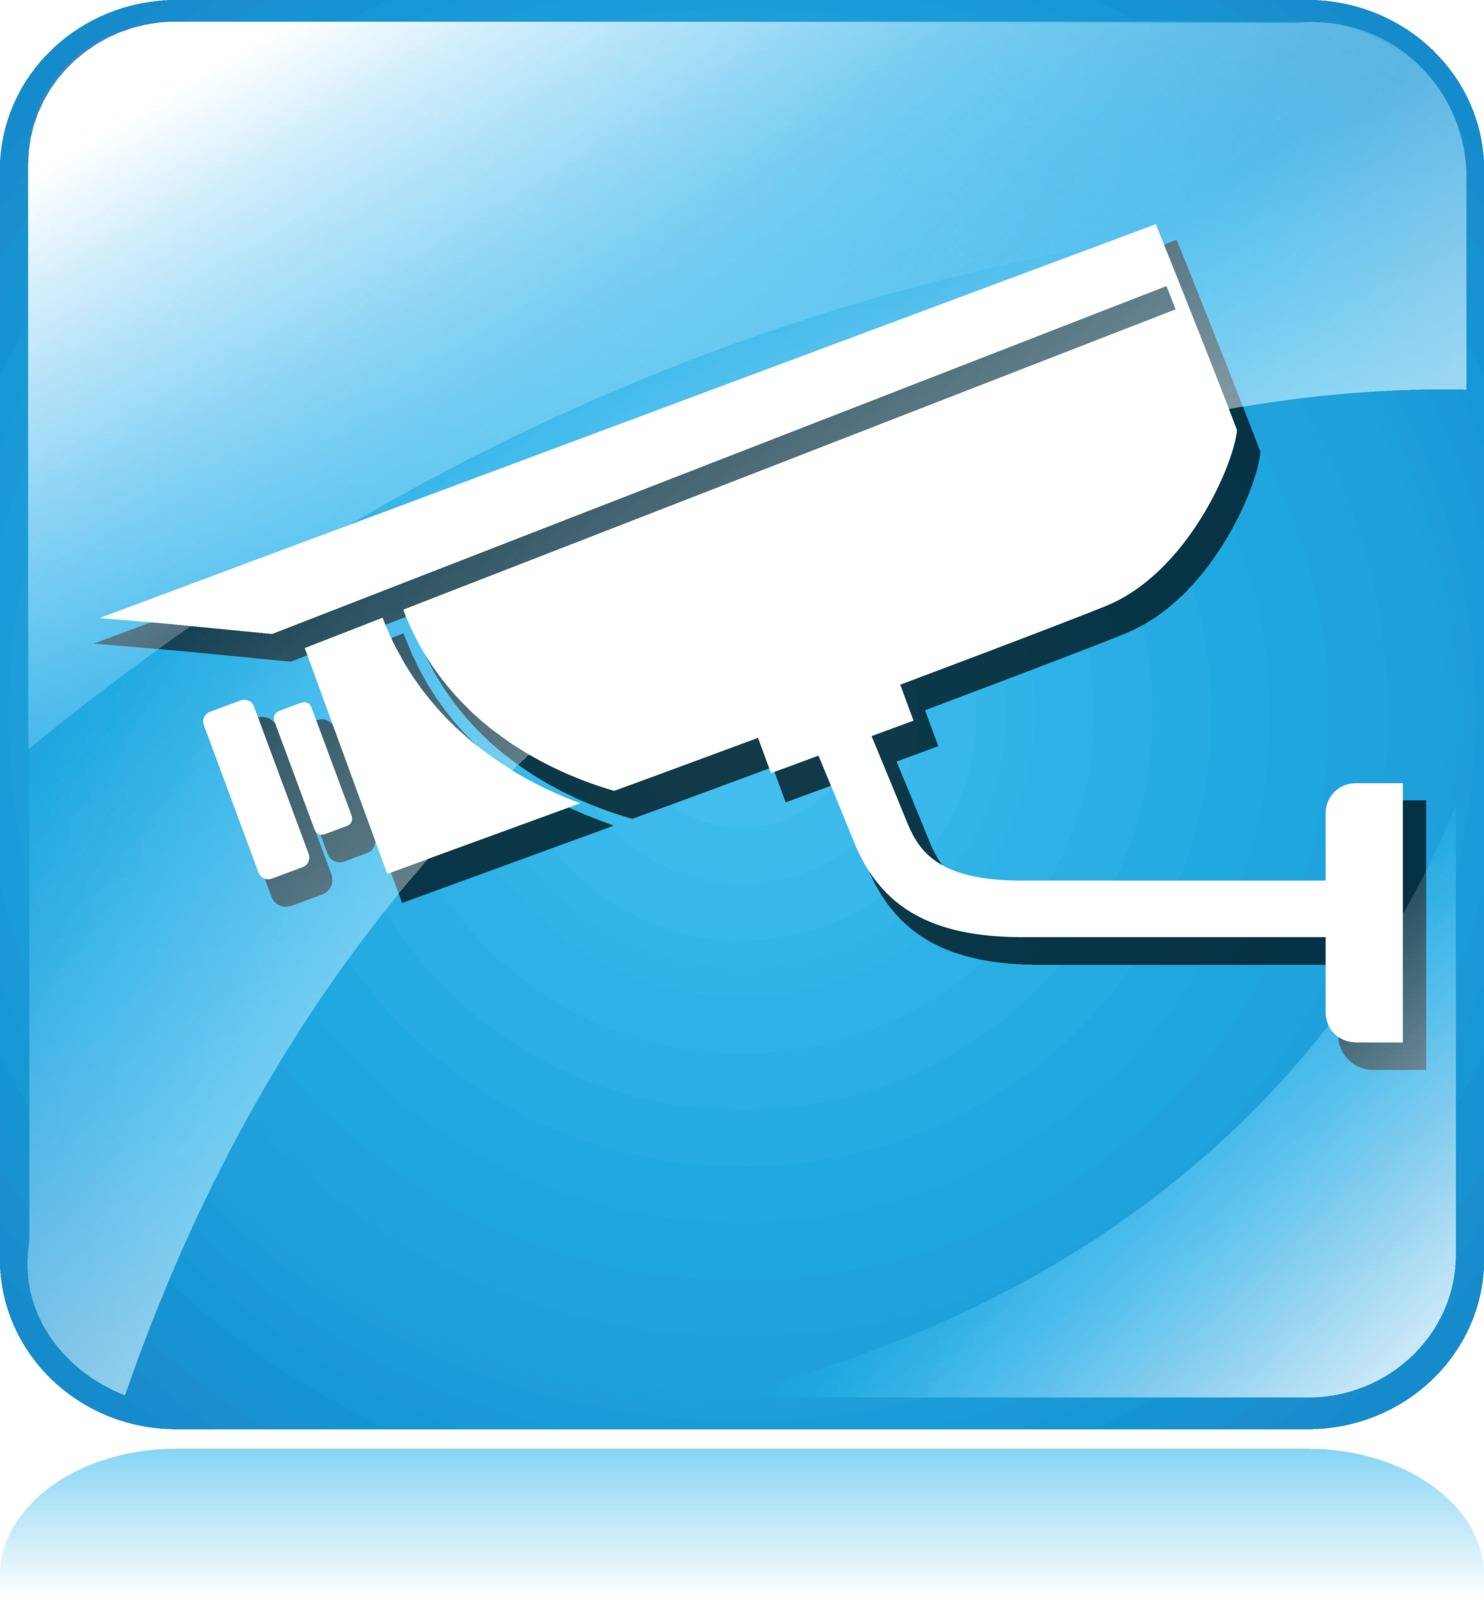 camera surveillance blue square icon by nickylarson974